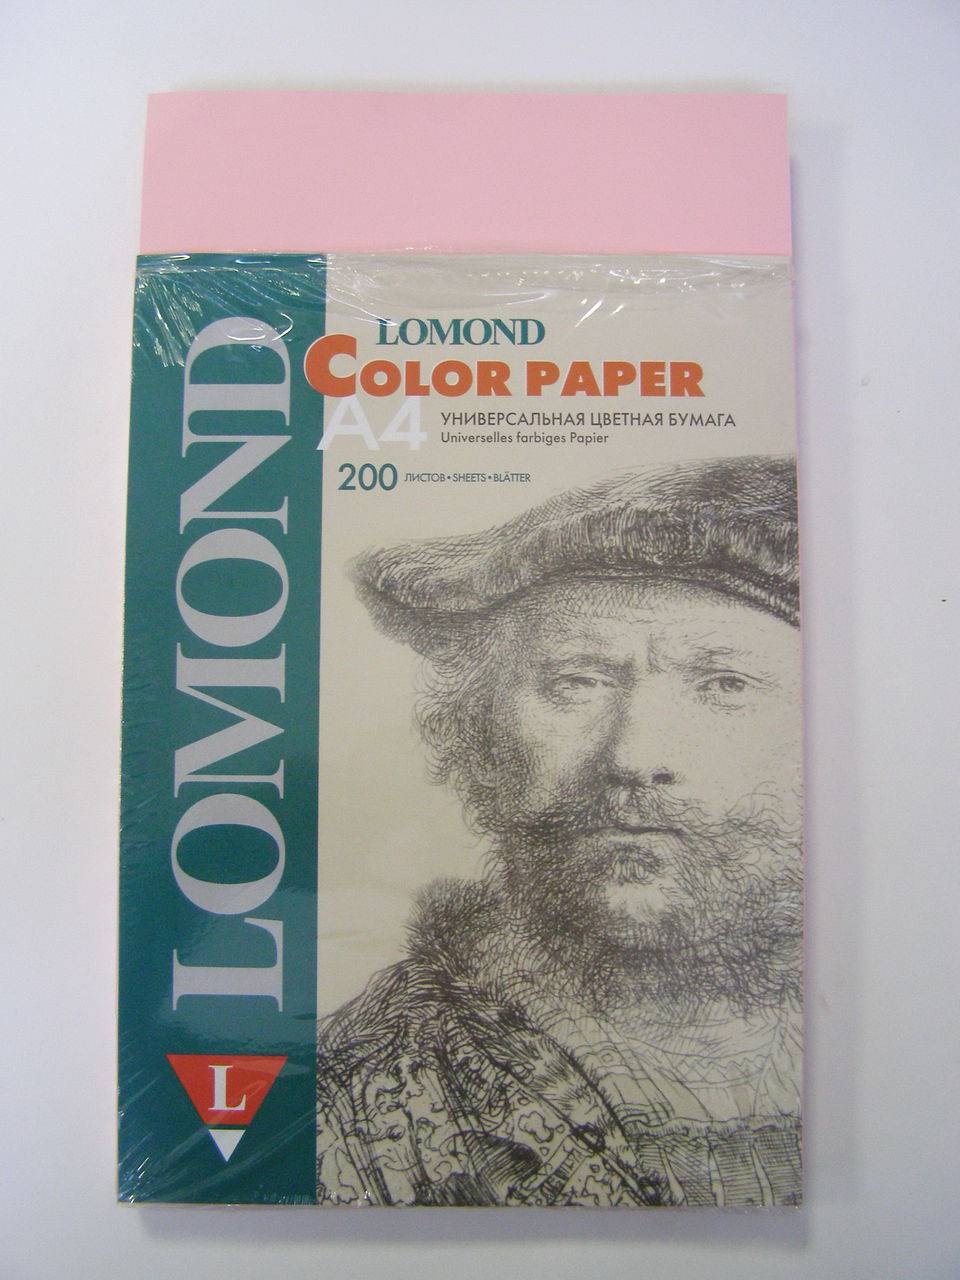 Офисная цветная бумага LOMOND, Lavender (Cиреневый), A4, 80 г/м2, 200л., пастель